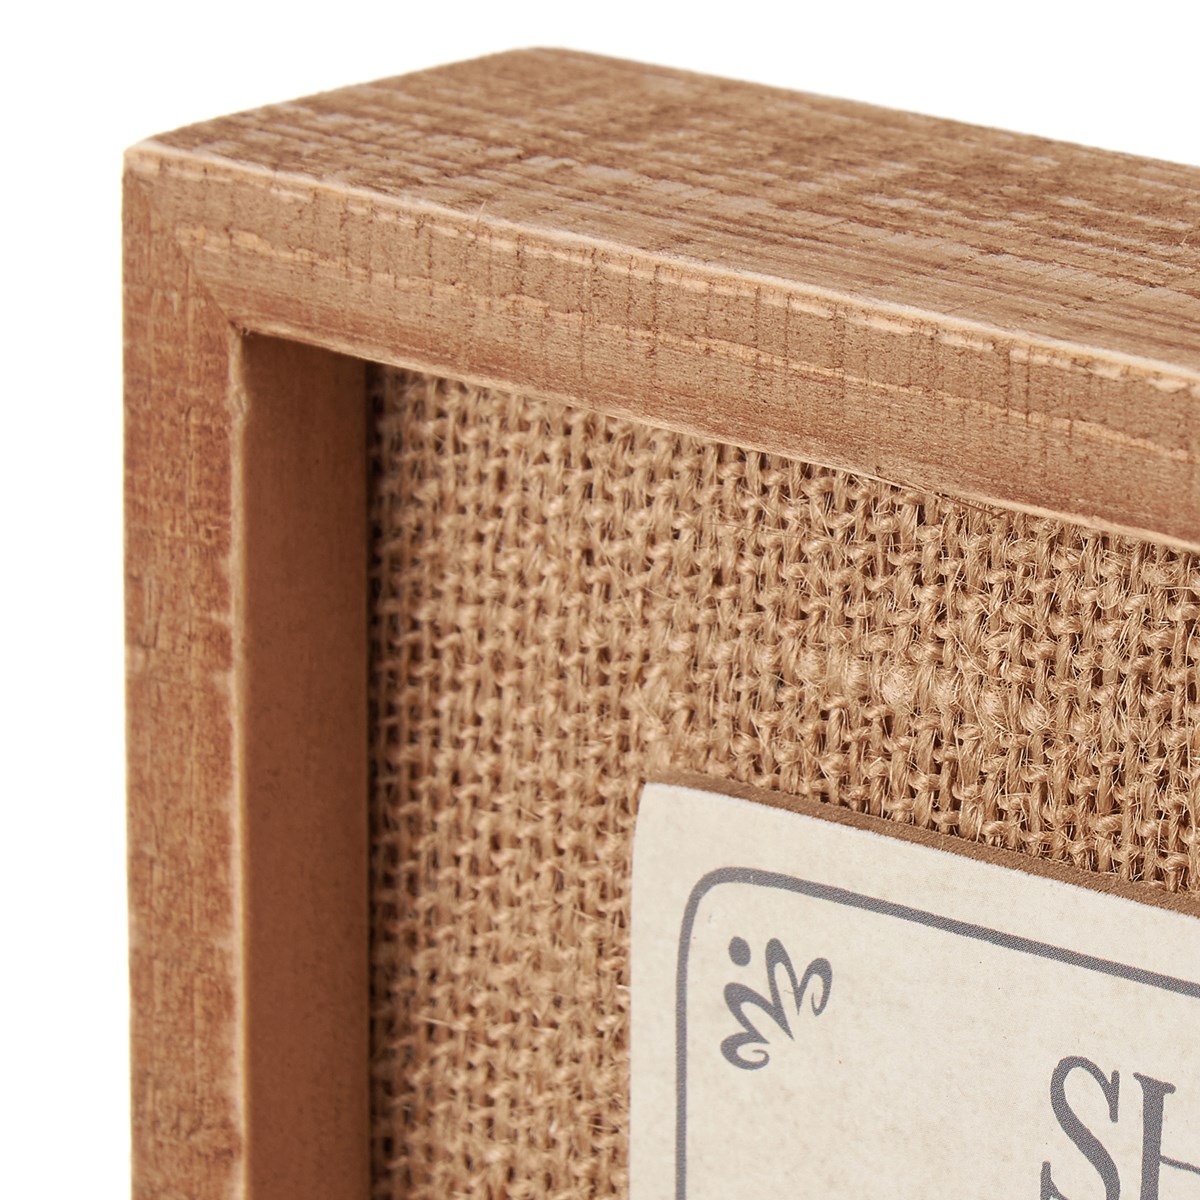 Shasta Daisy Inset Box Sign - Wood, Burlap, Paper